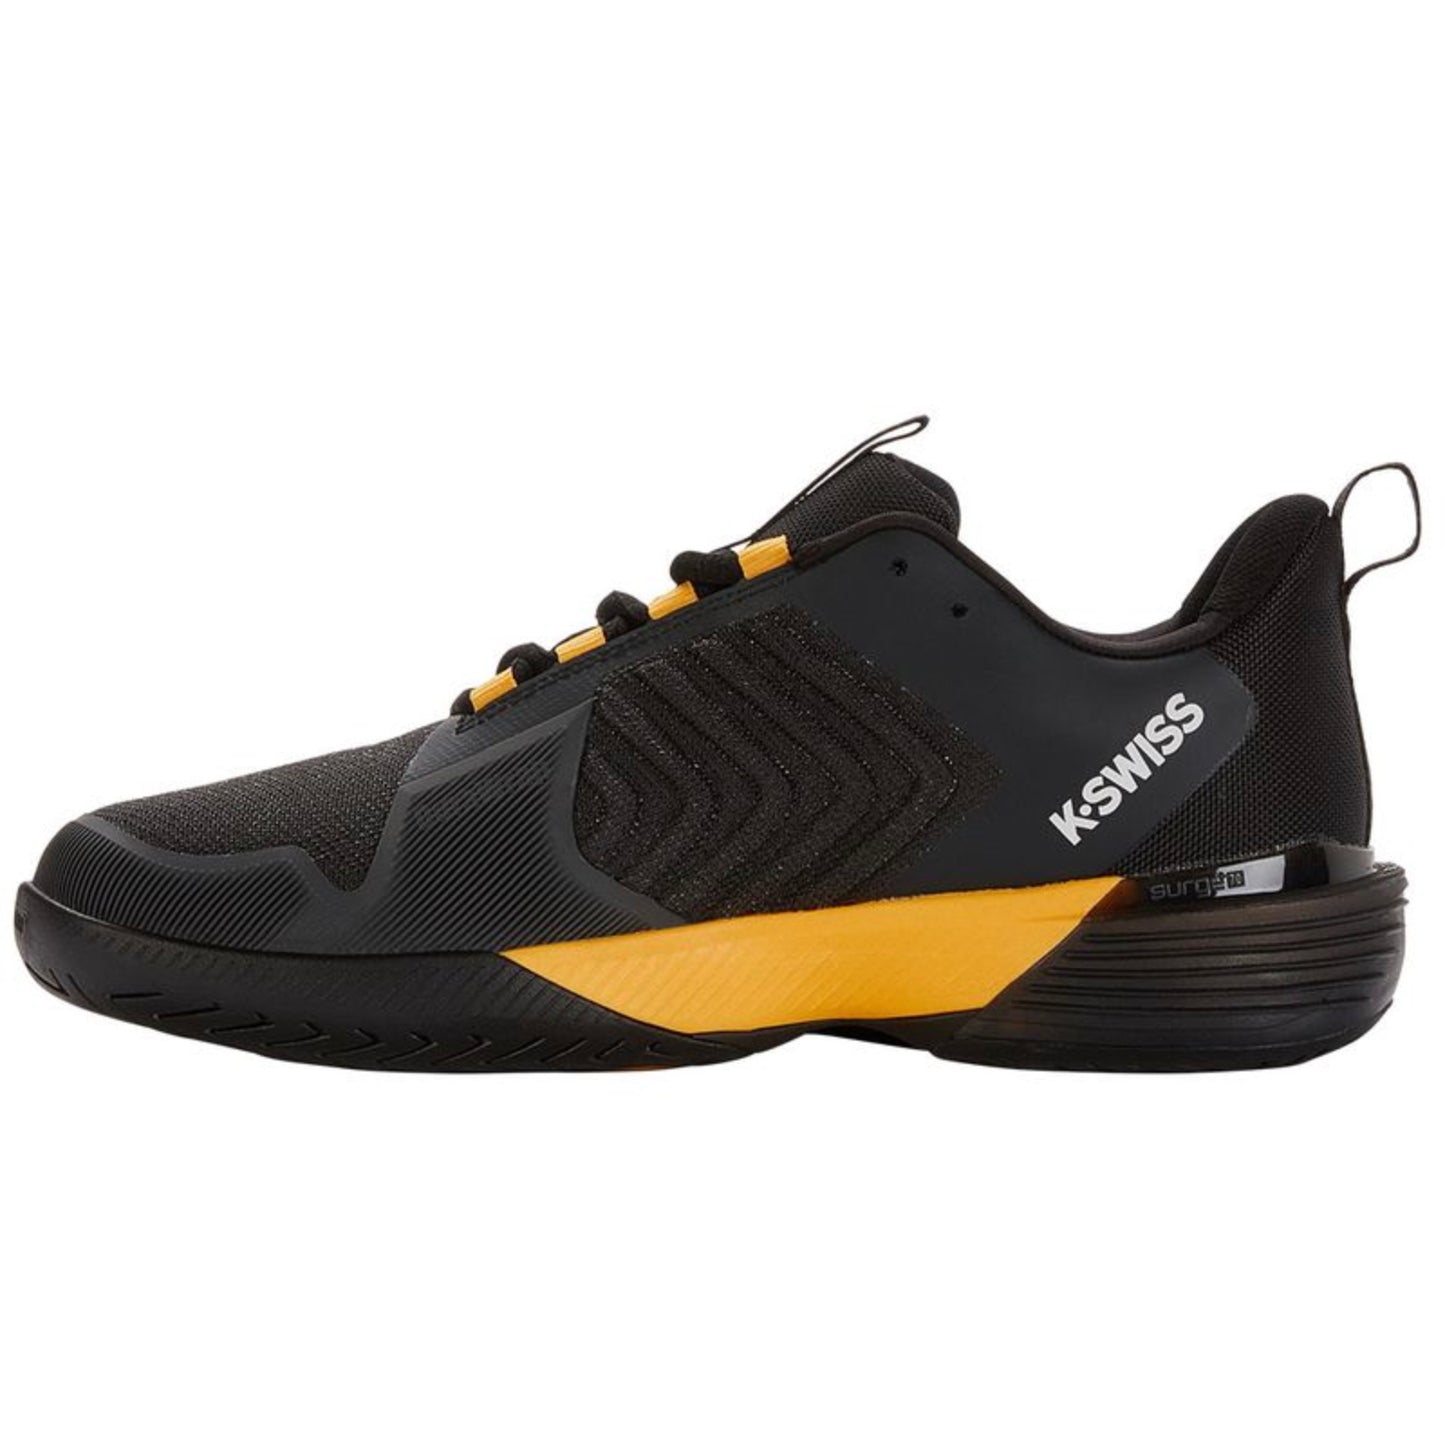 K-Swiss Ultrashot 3 men's tennis shoes - Black/Yellow 6988-071